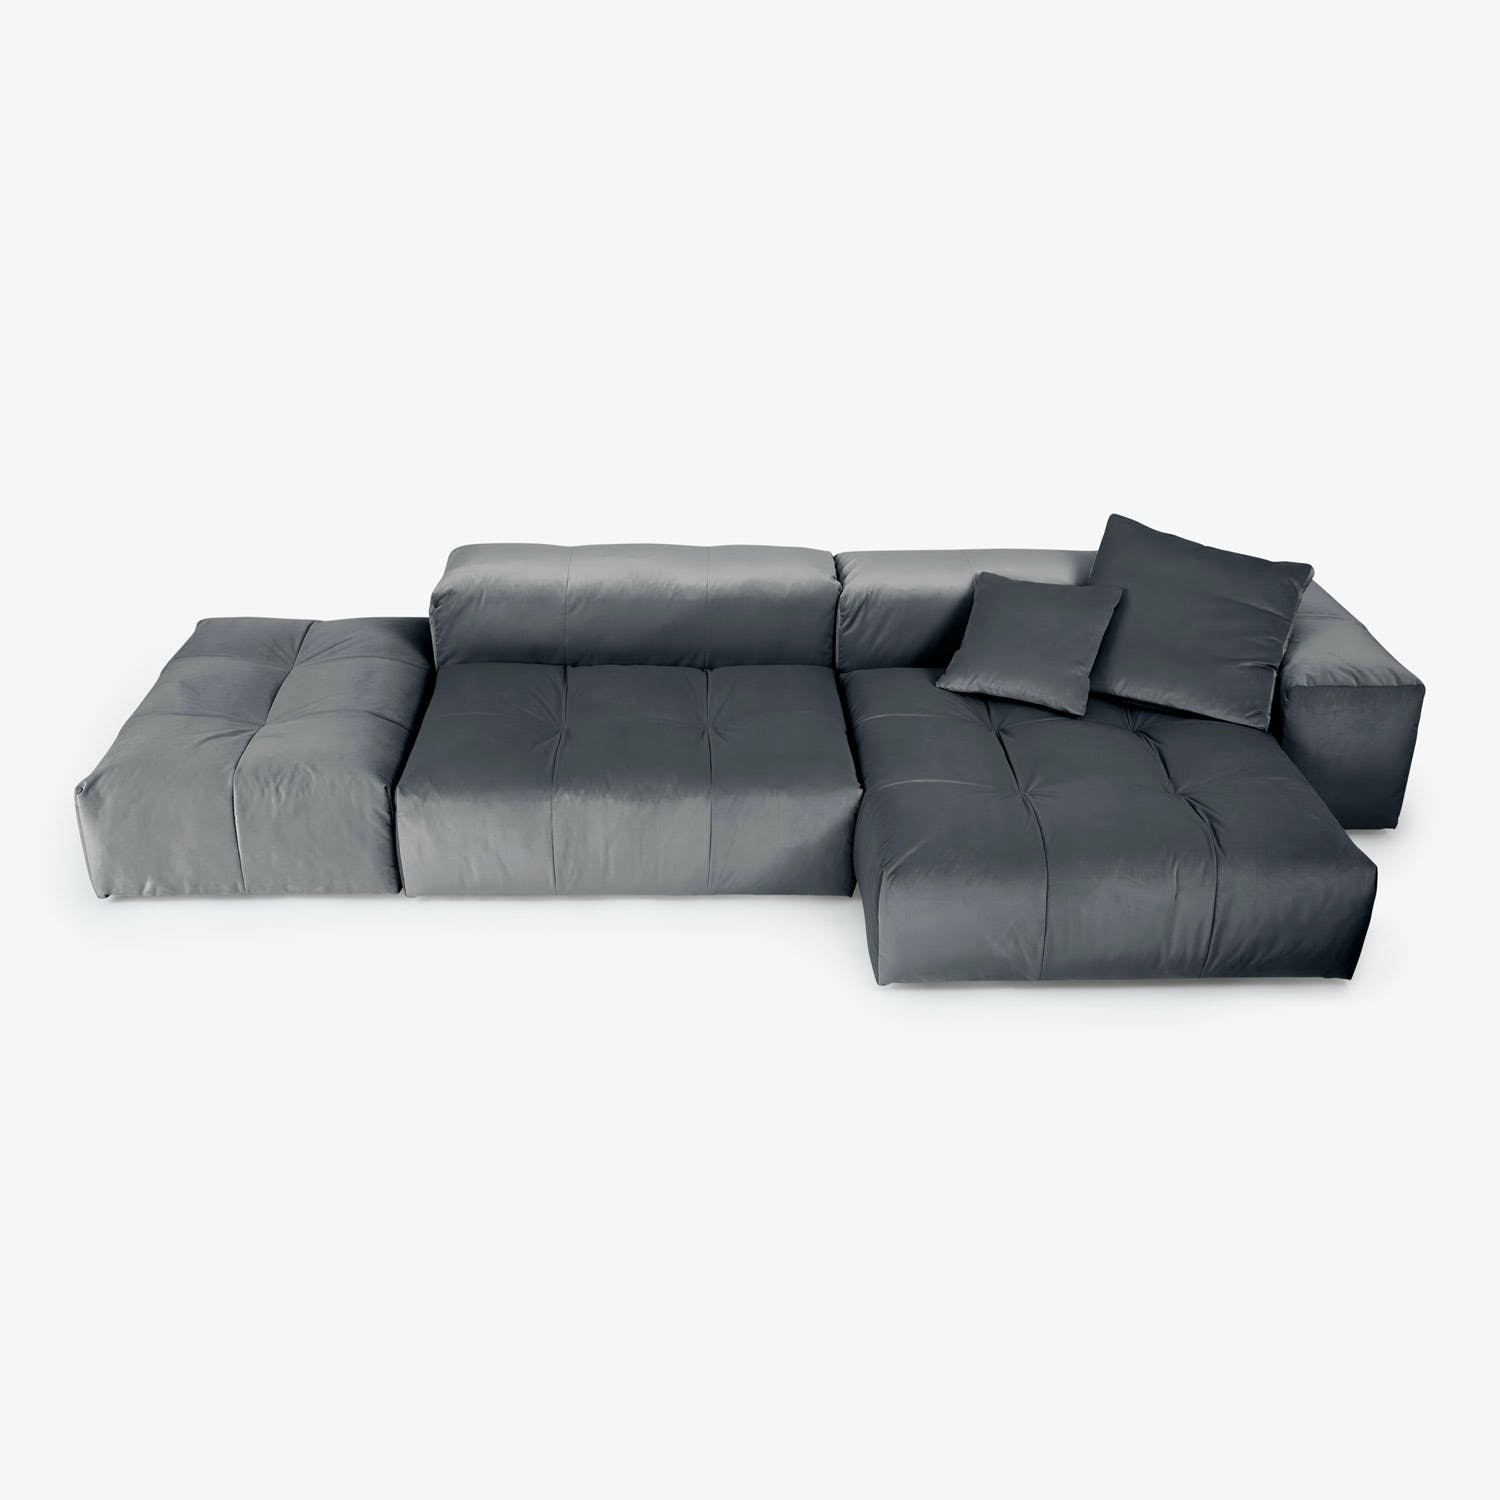 Modern, modular sectional sofa in dark grey offers customizable seating.